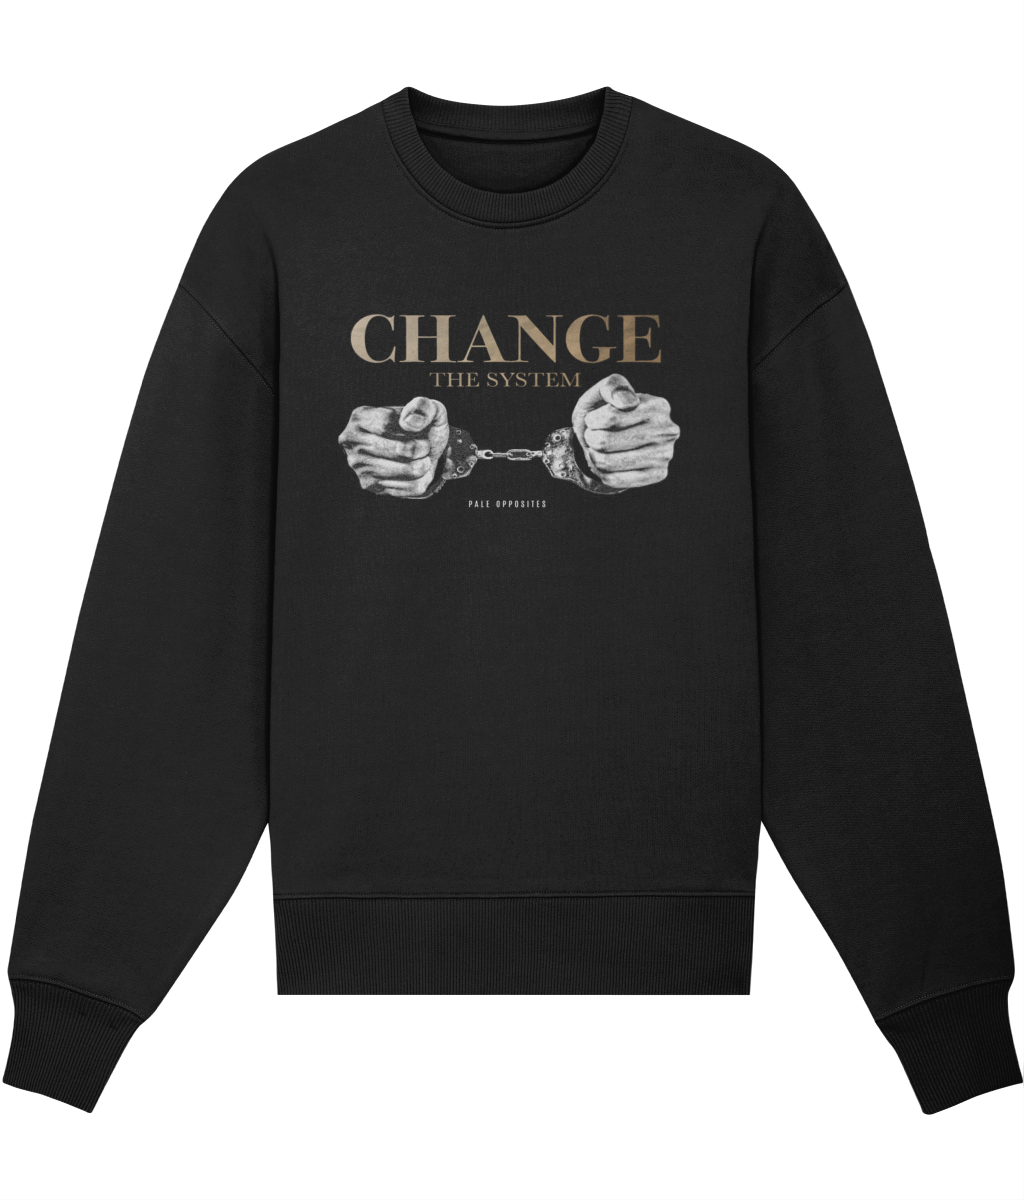 Change The System - Superior Cotton Sweatshirt